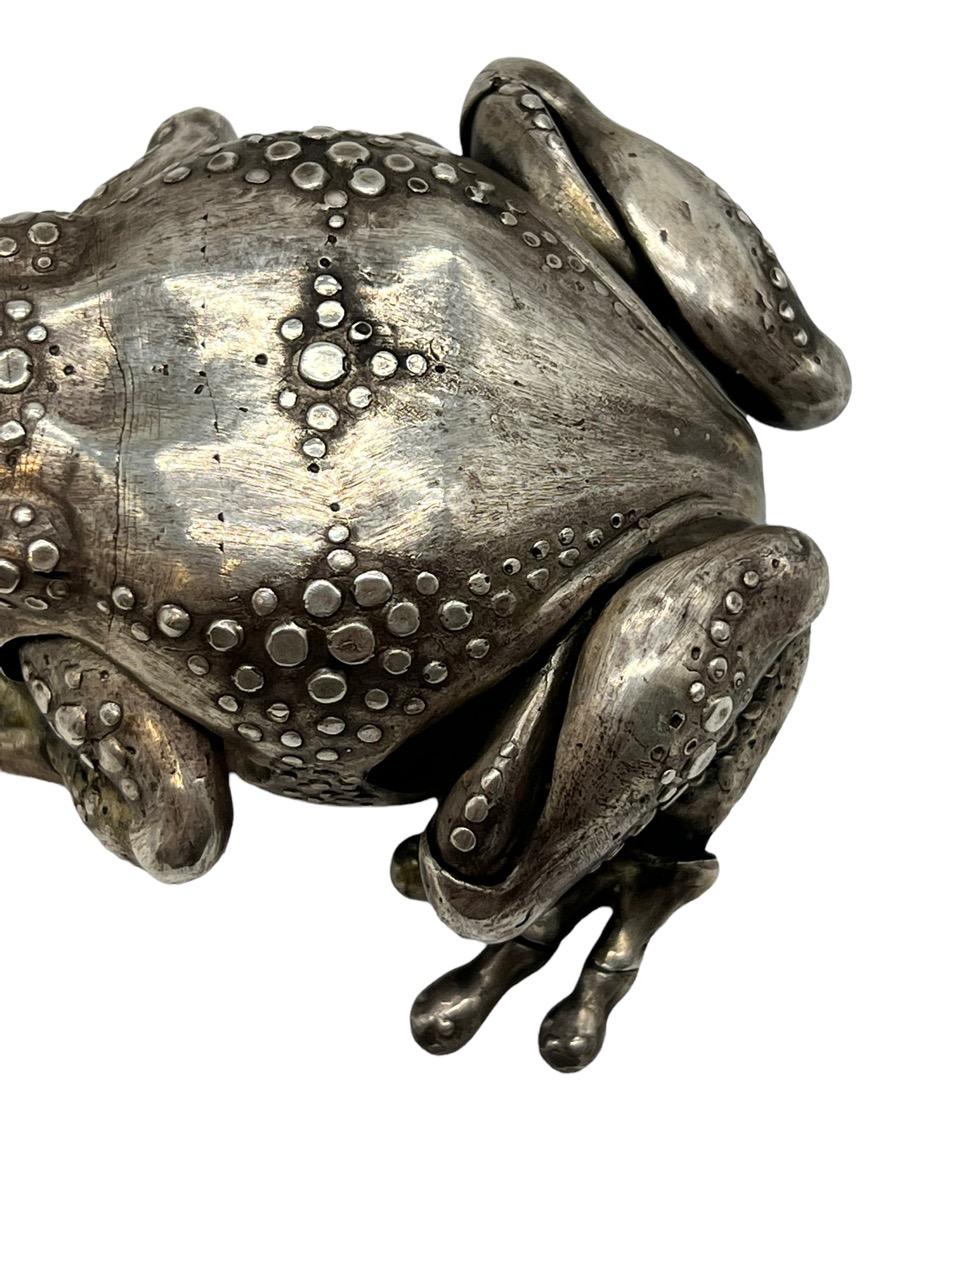 Oleg Konstantinov Fully Articulated Frog Made of Sterling Silver 7